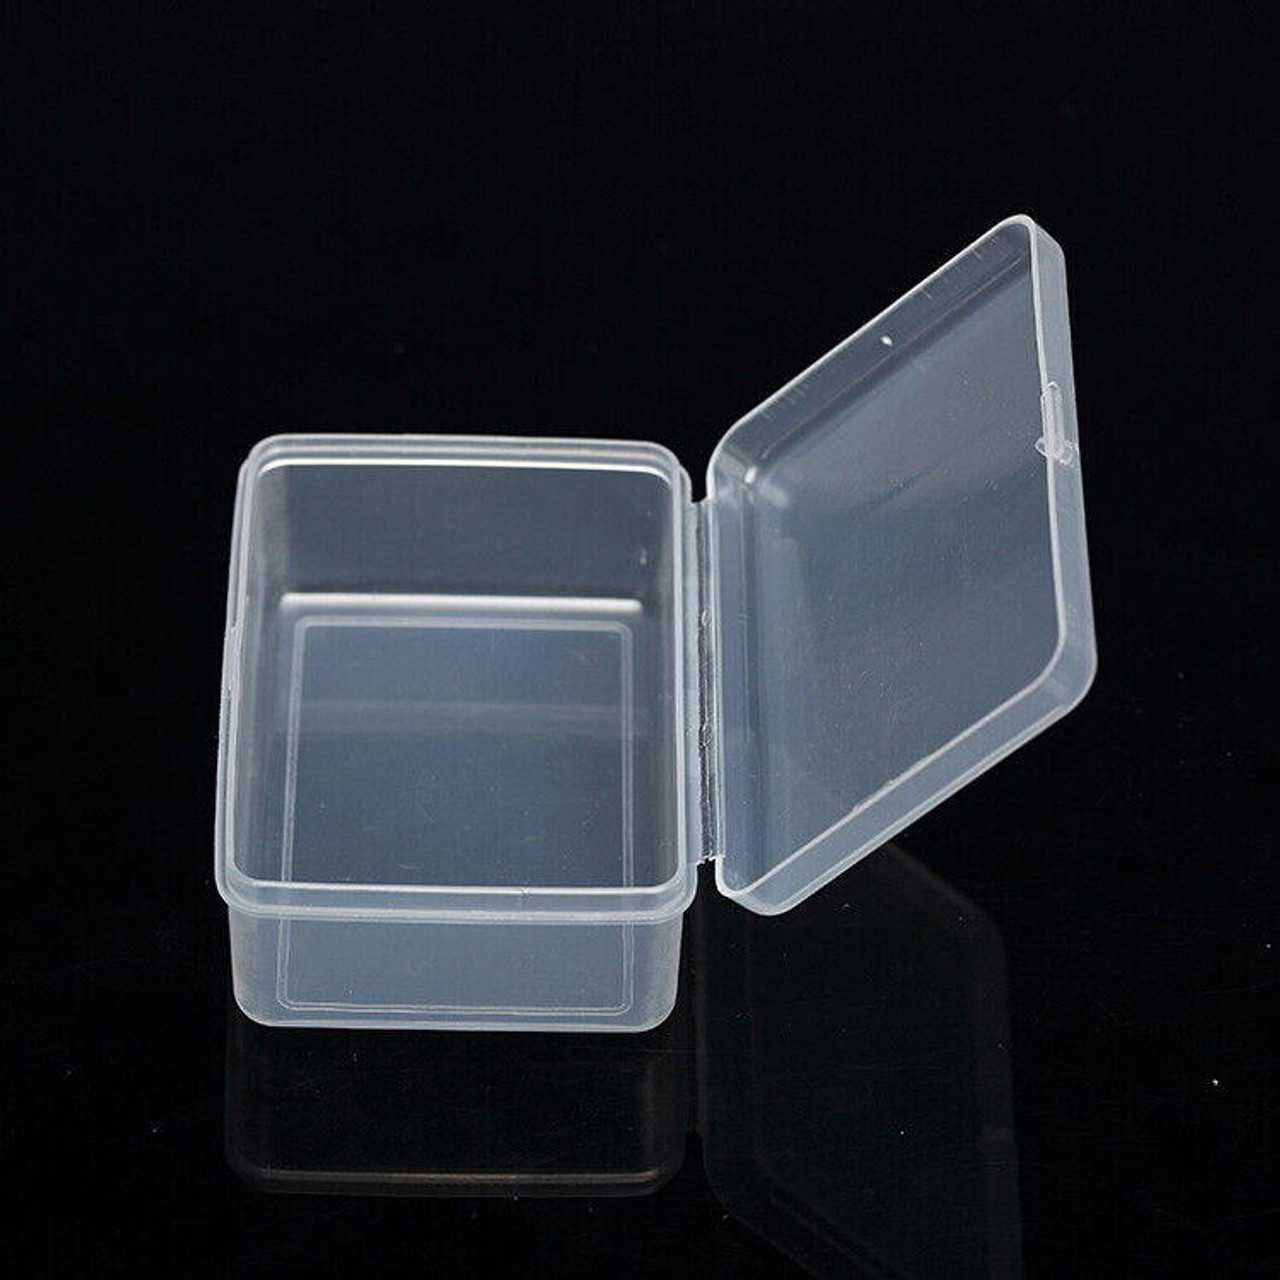 Small Plastic Storage Boxes